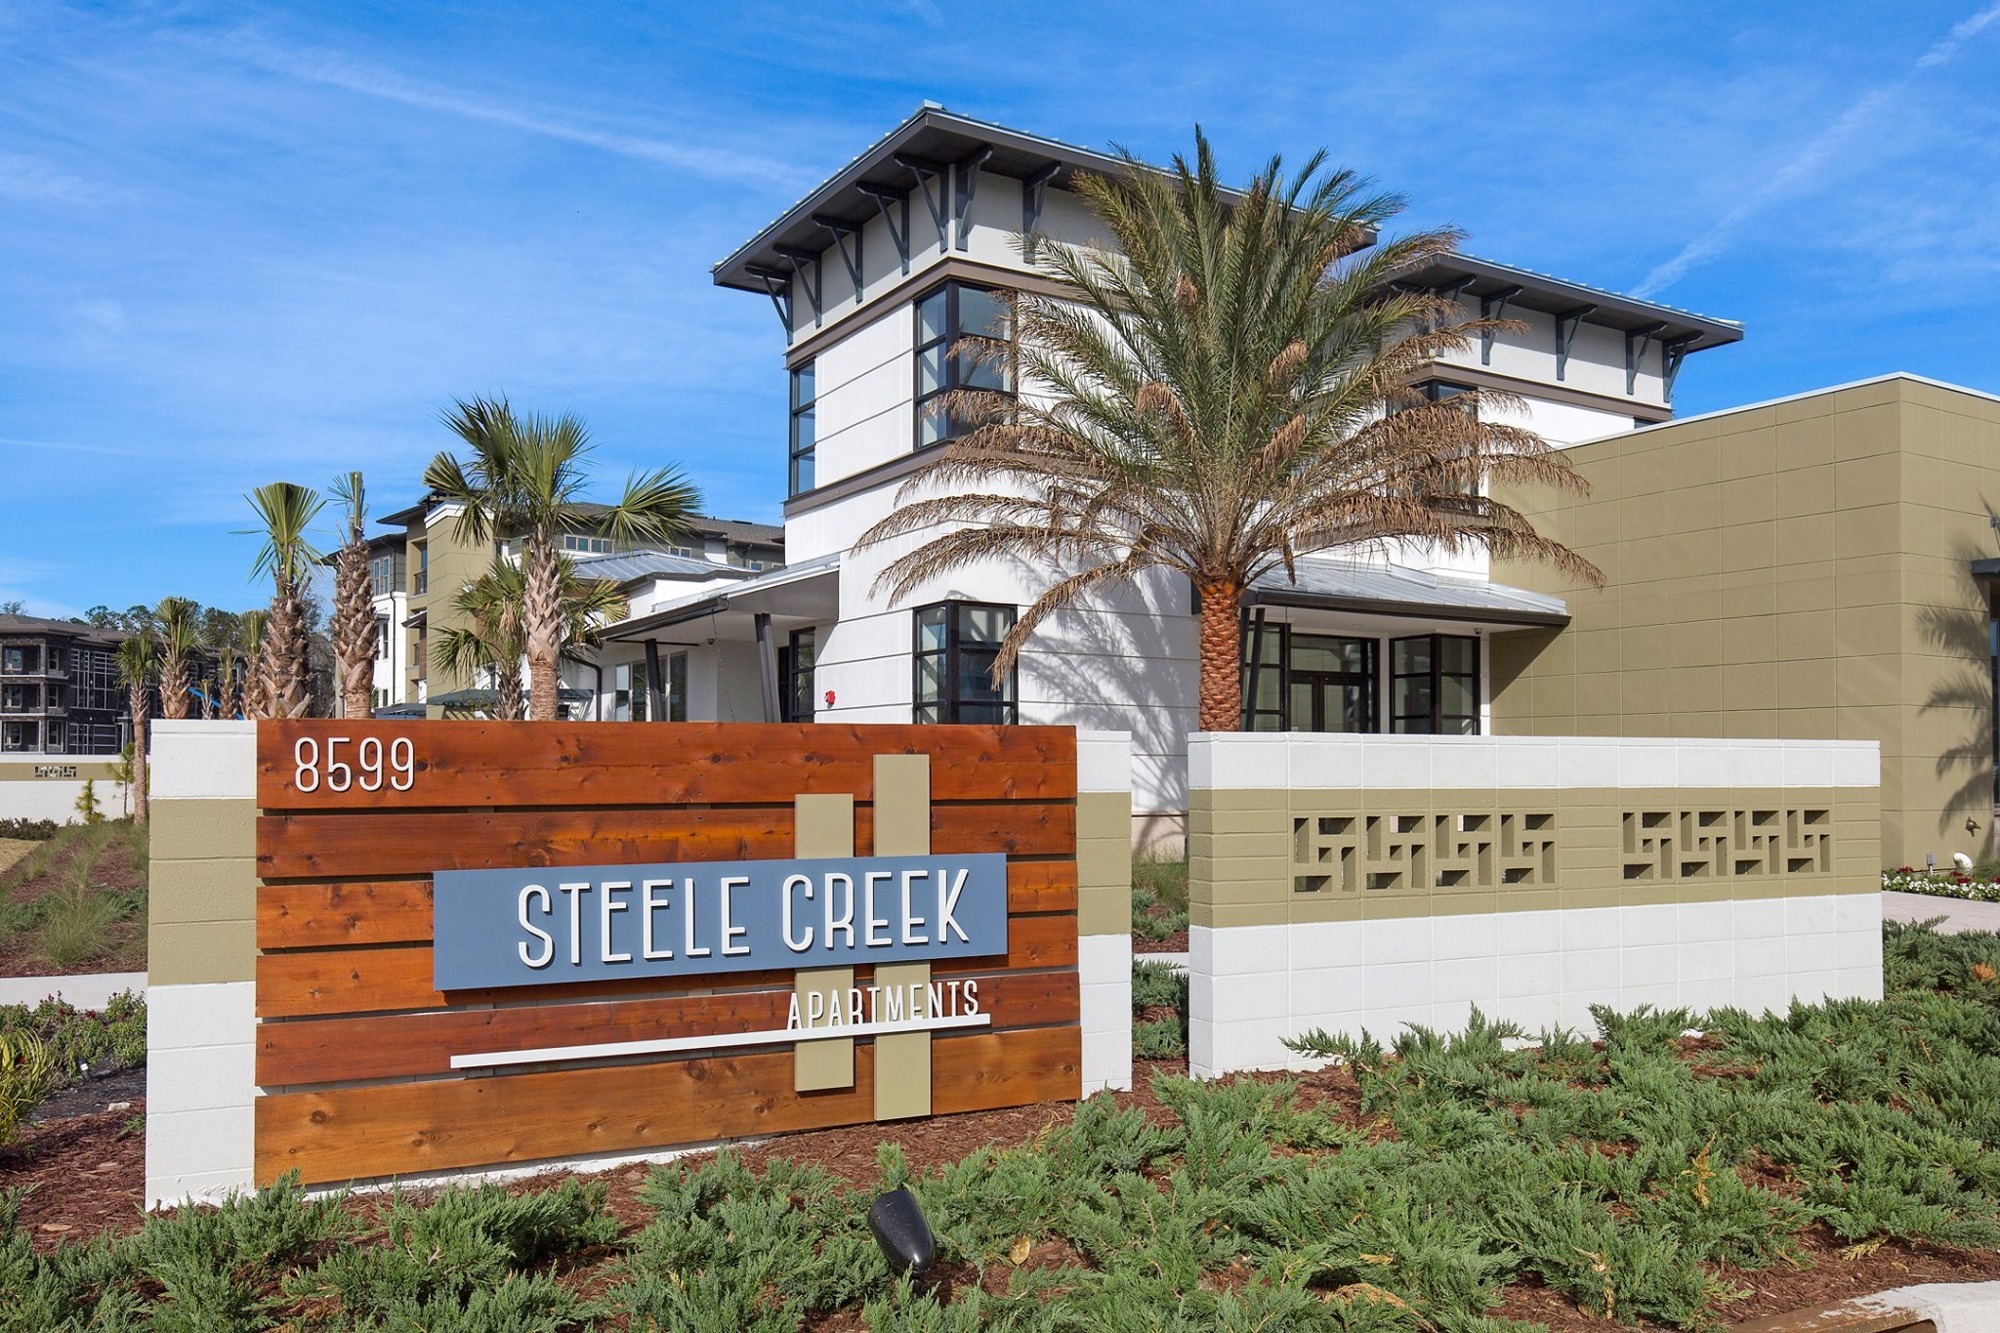 Steele Creek Apartments